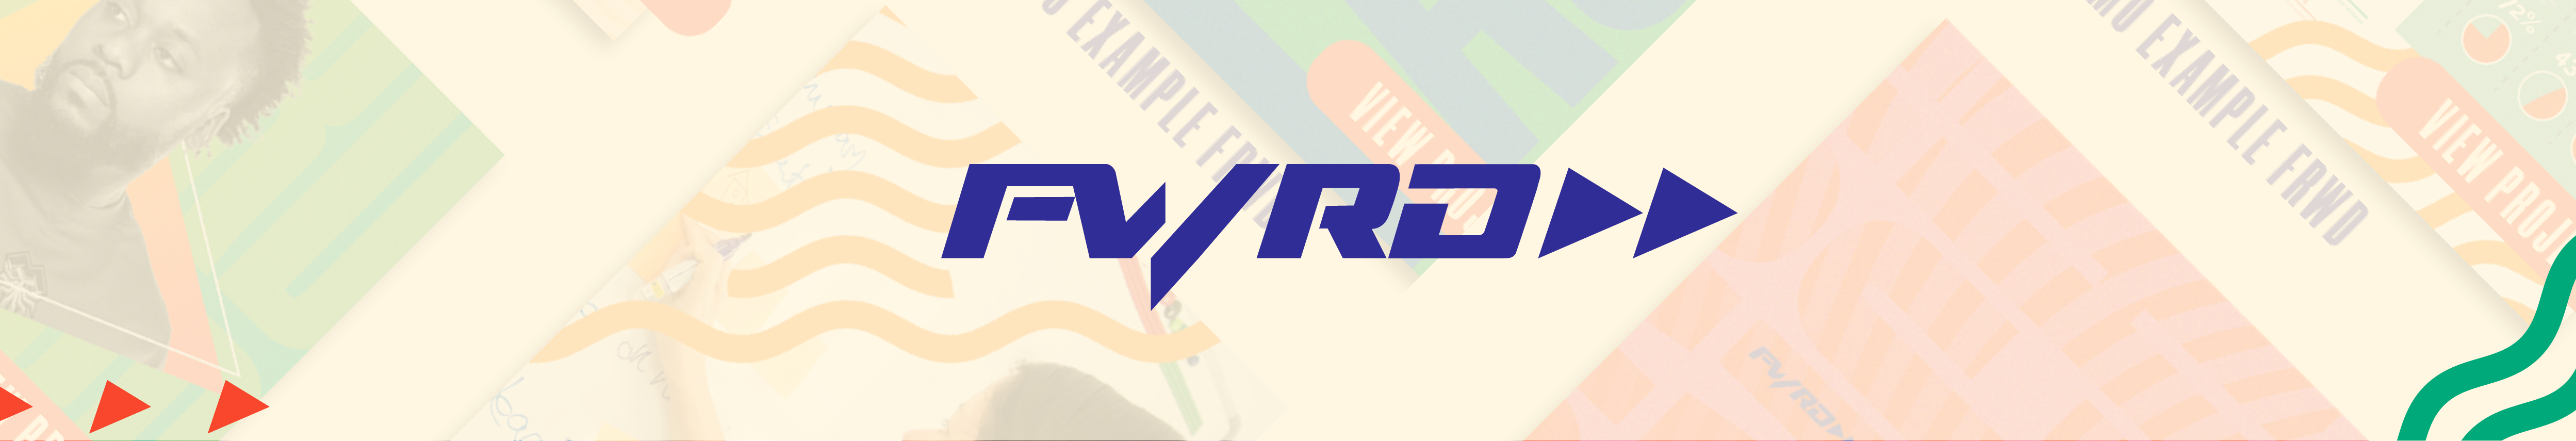 FWRD Digital & Product's profile banner